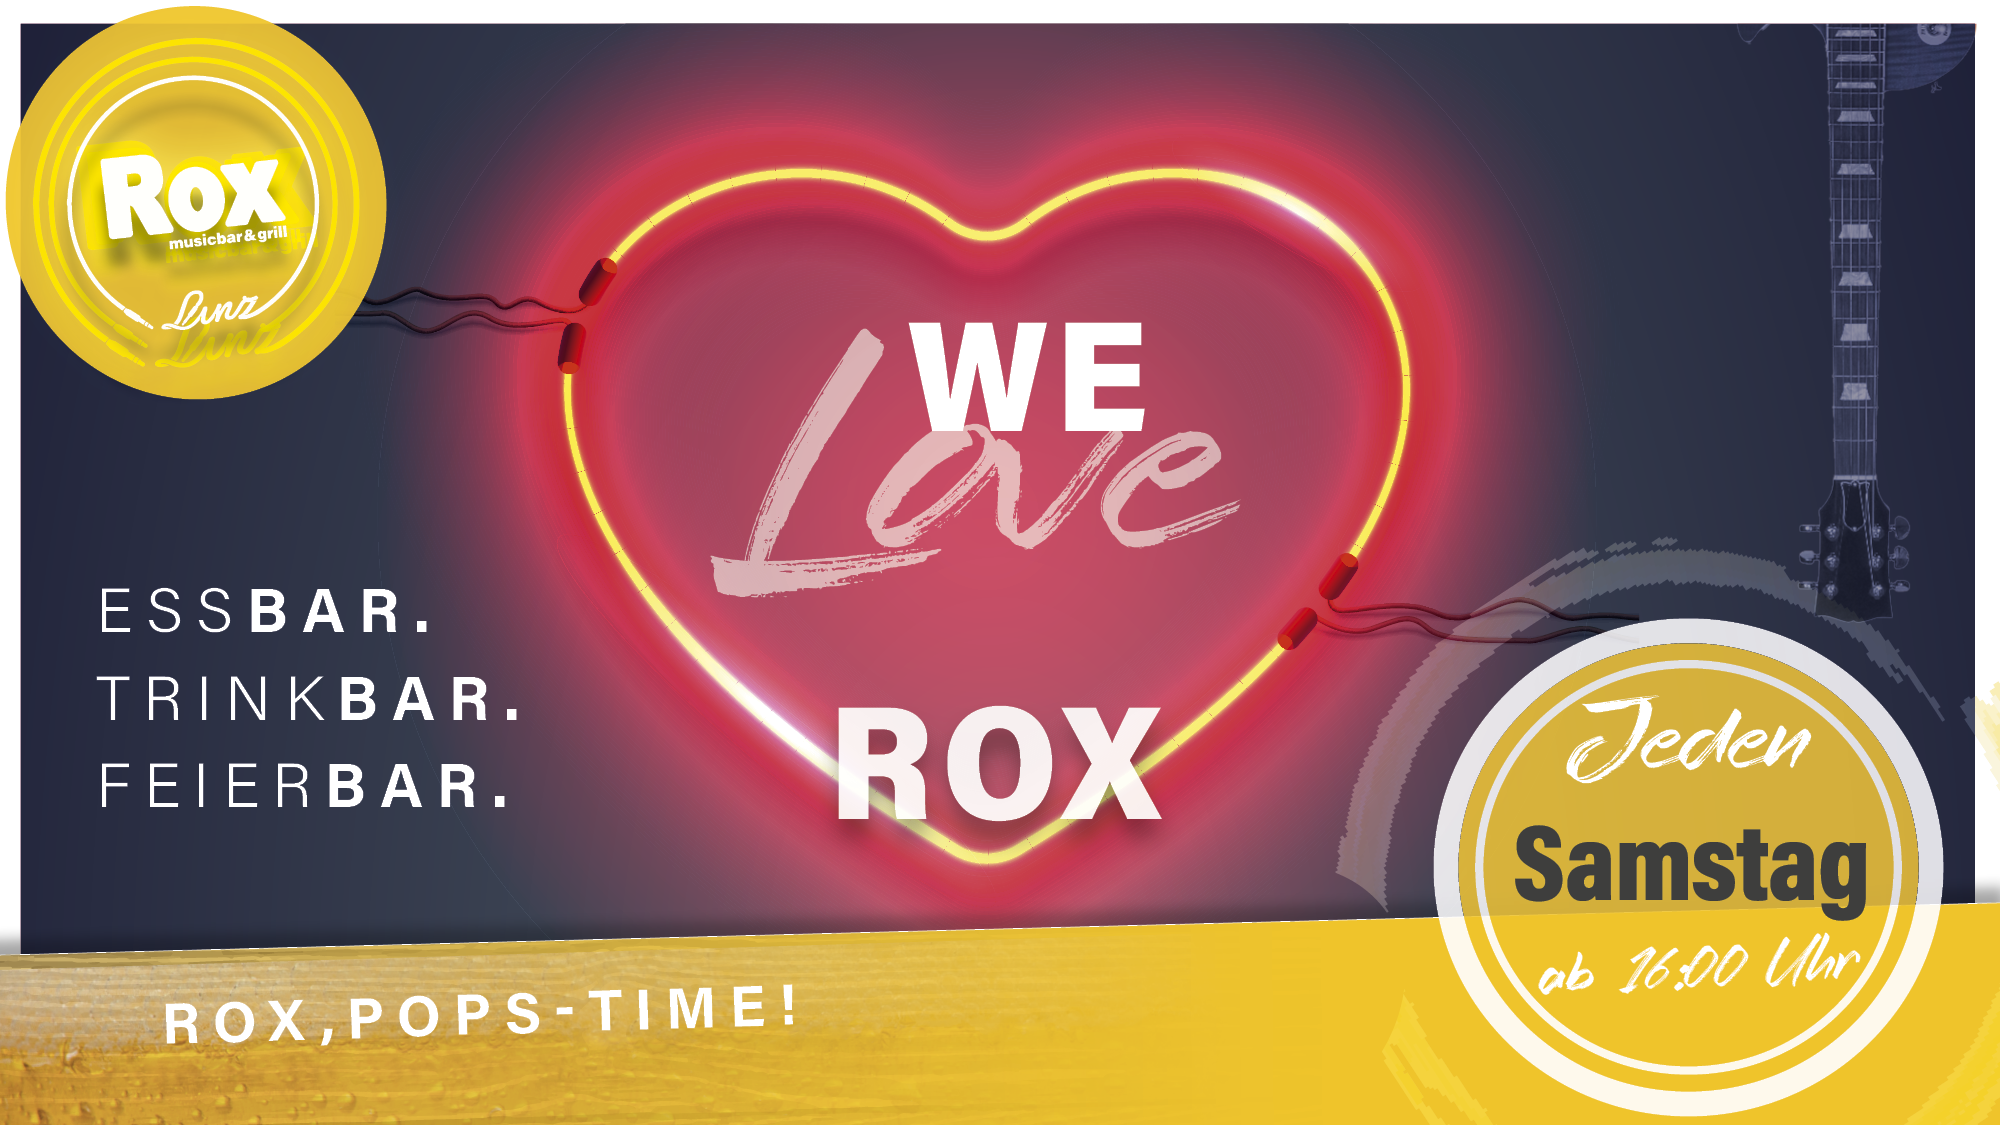 We love Rox